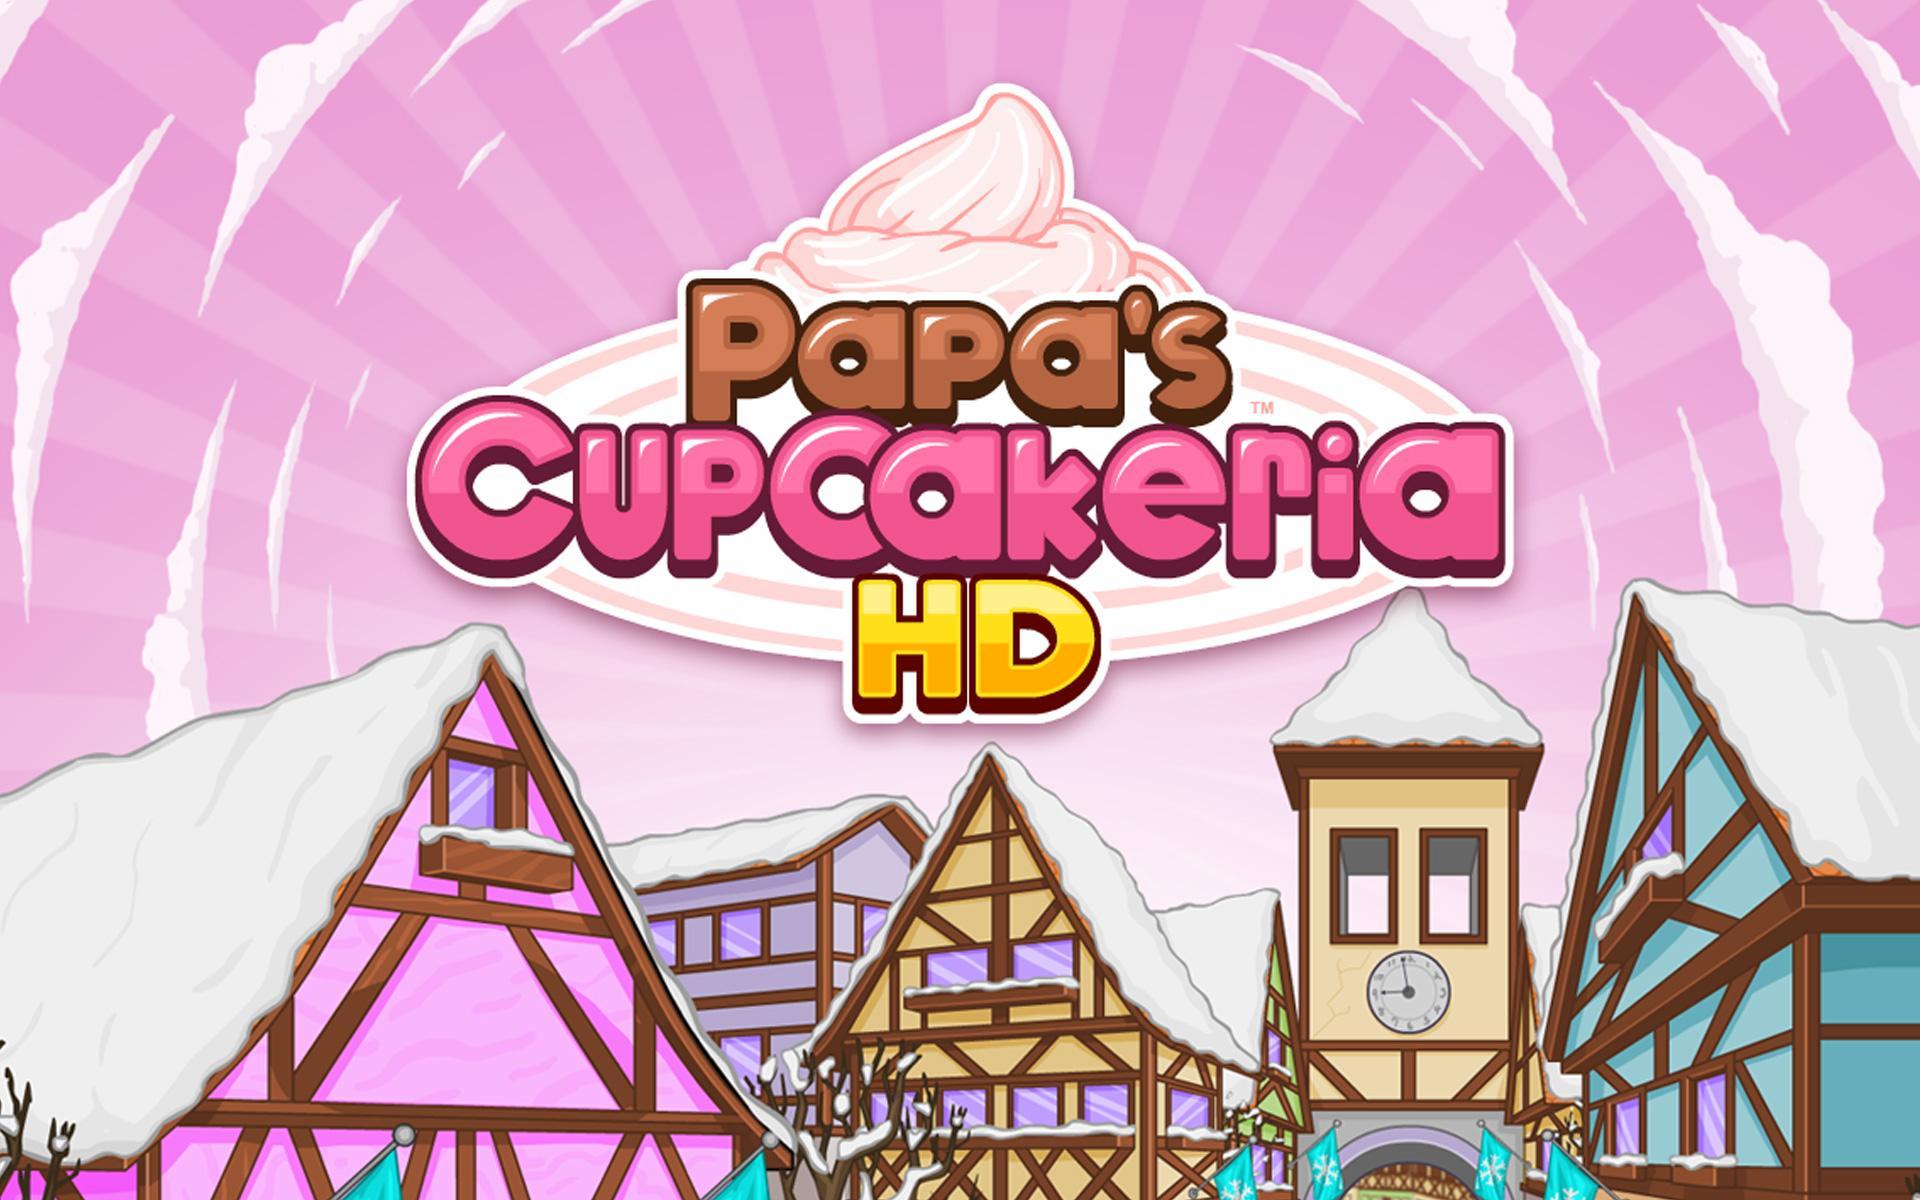 Screenshot 1 of Cupcakeria HD Papa 